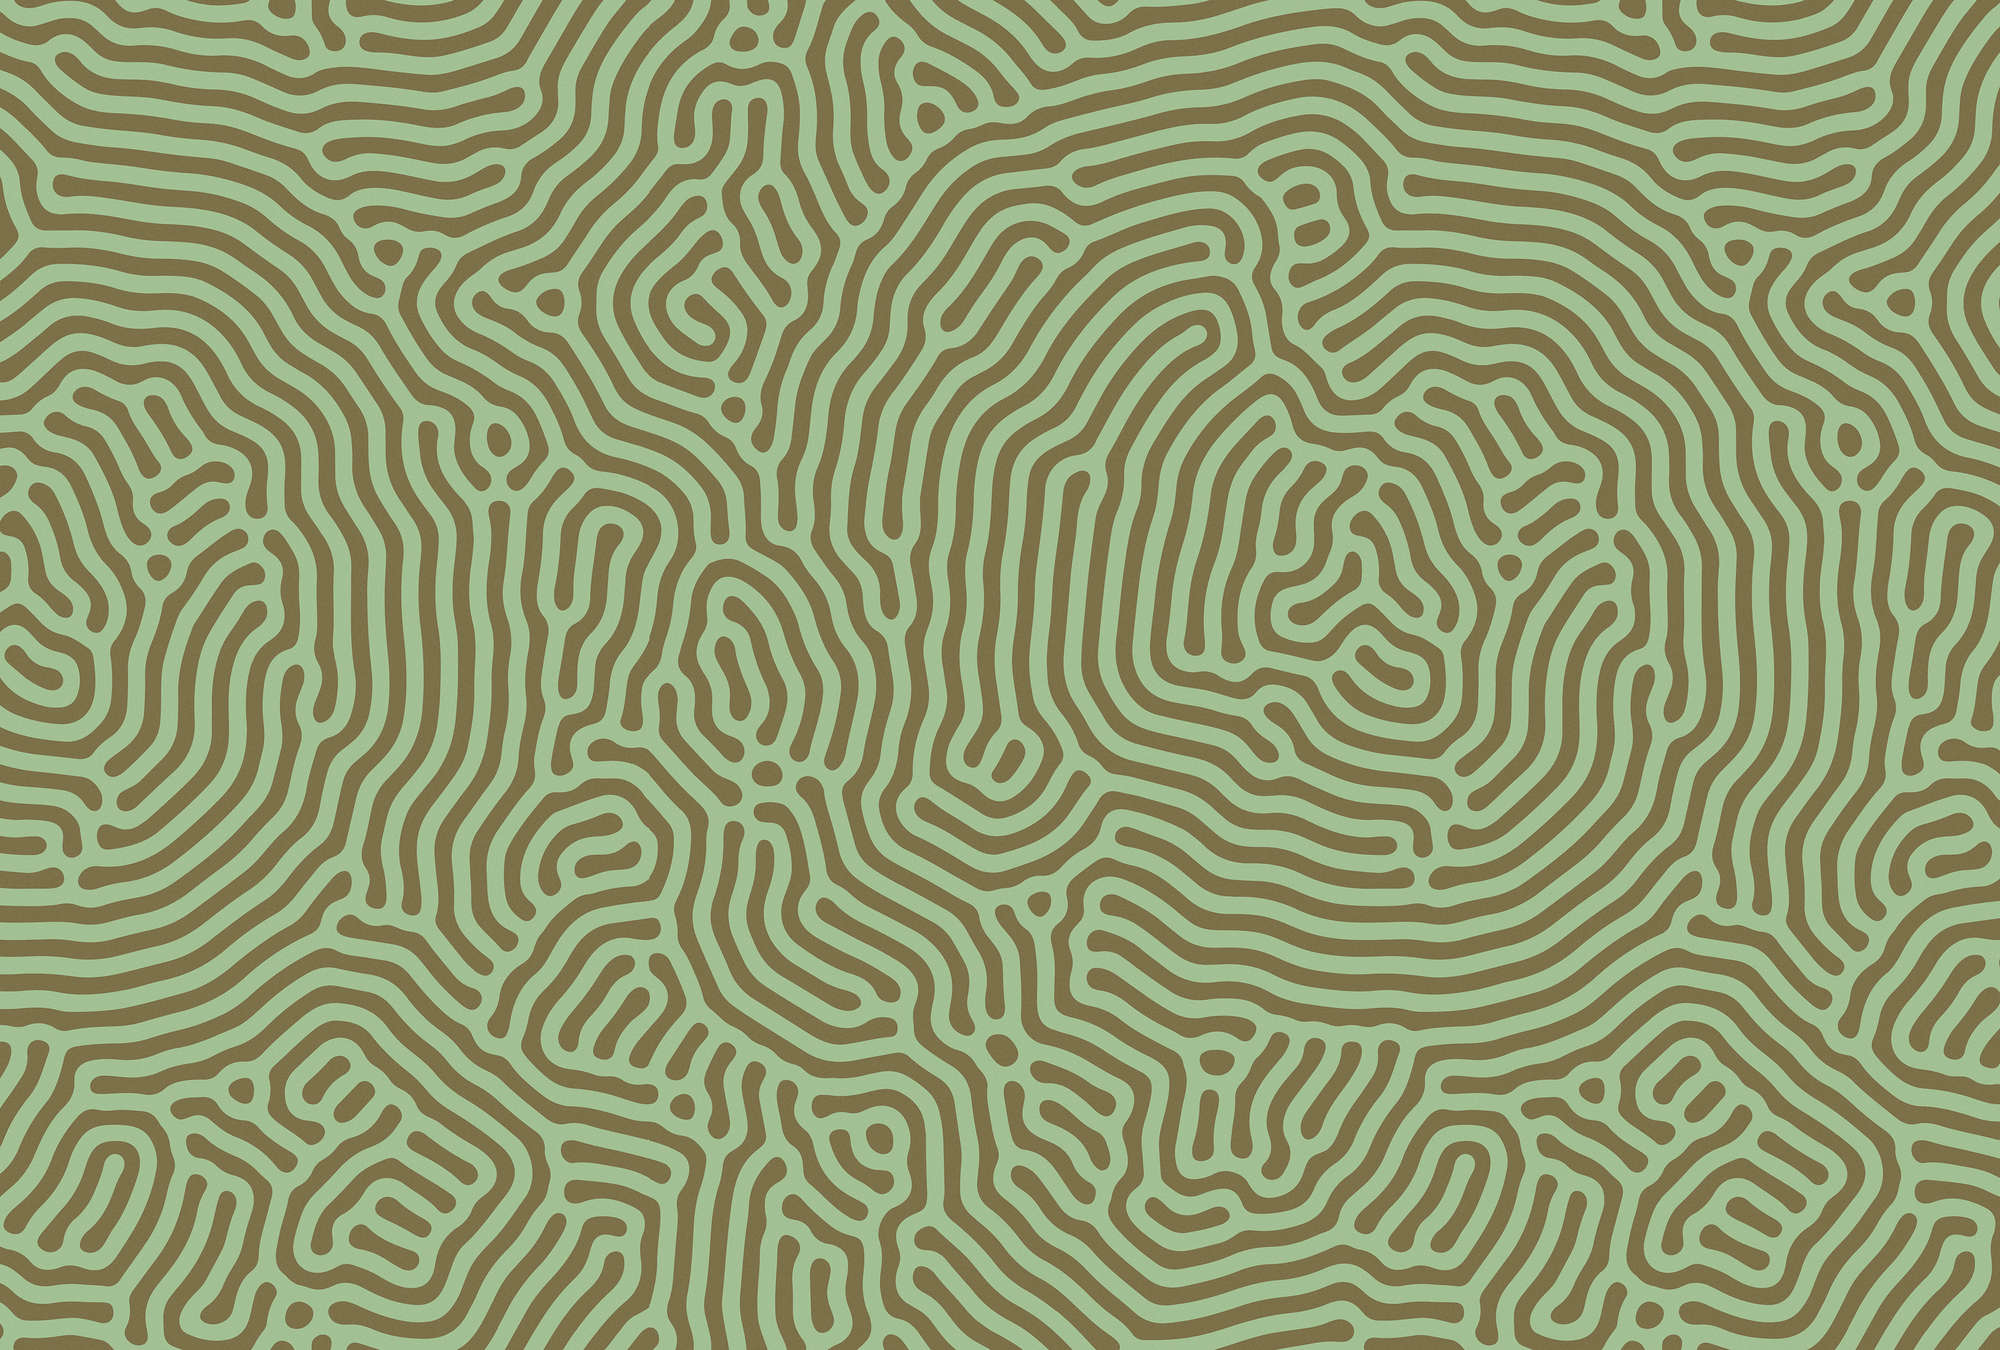             Sahel 1 - green wall mural labyrinth pattern sage green
        